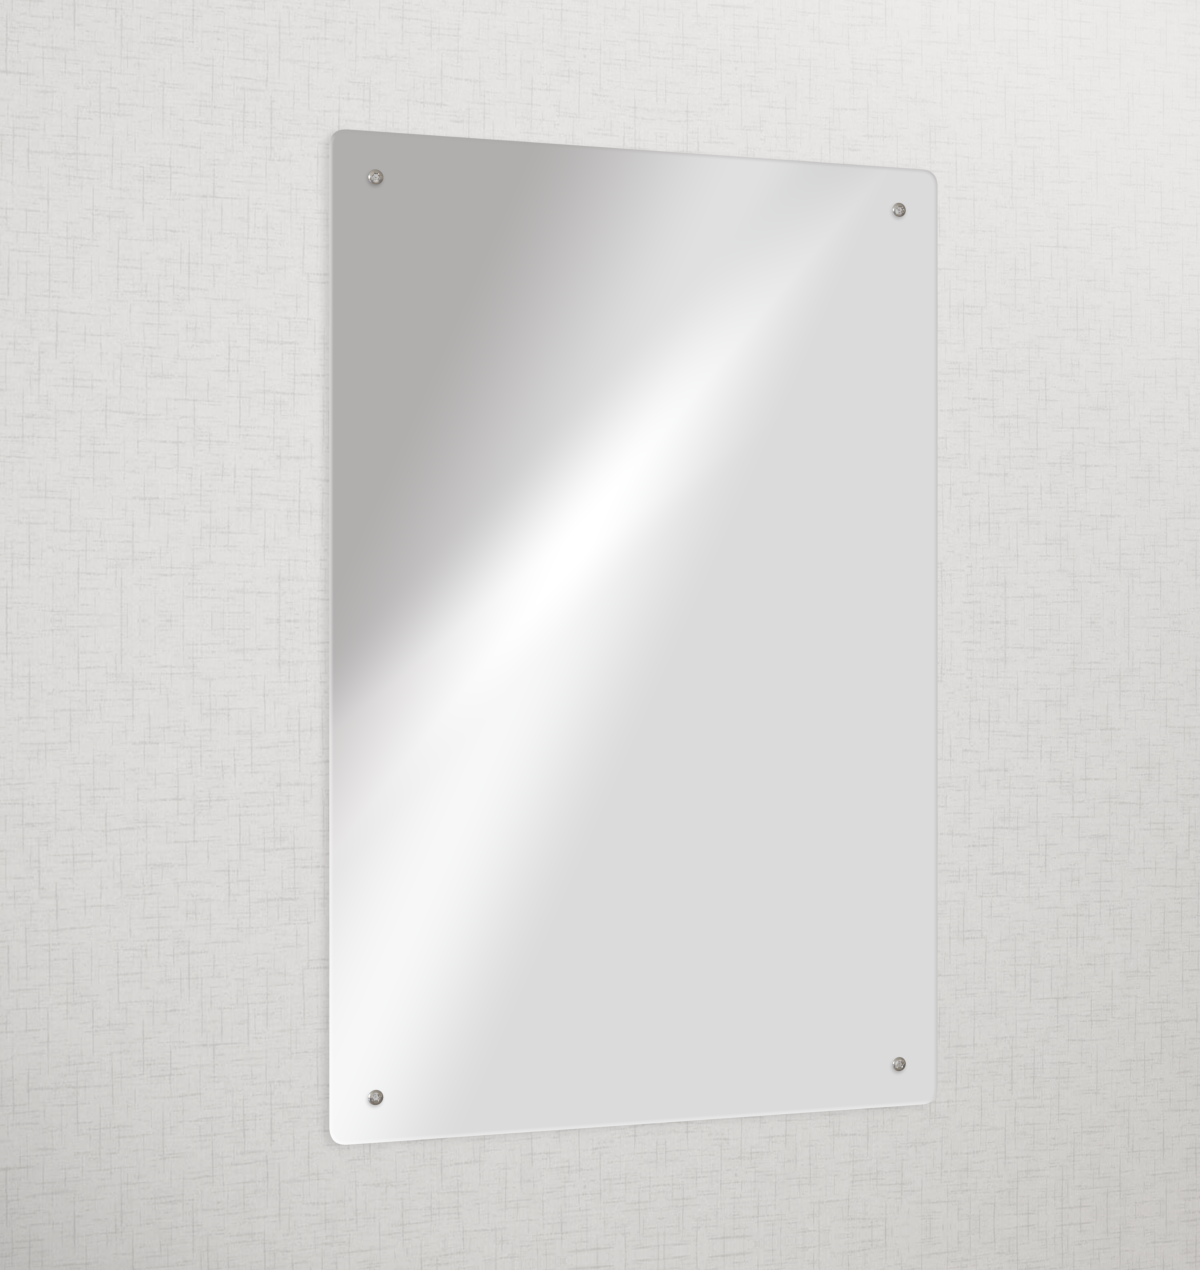 Stainless Steel Mirrors - Super Mirror Polish – Clarke's Safety Mirrors